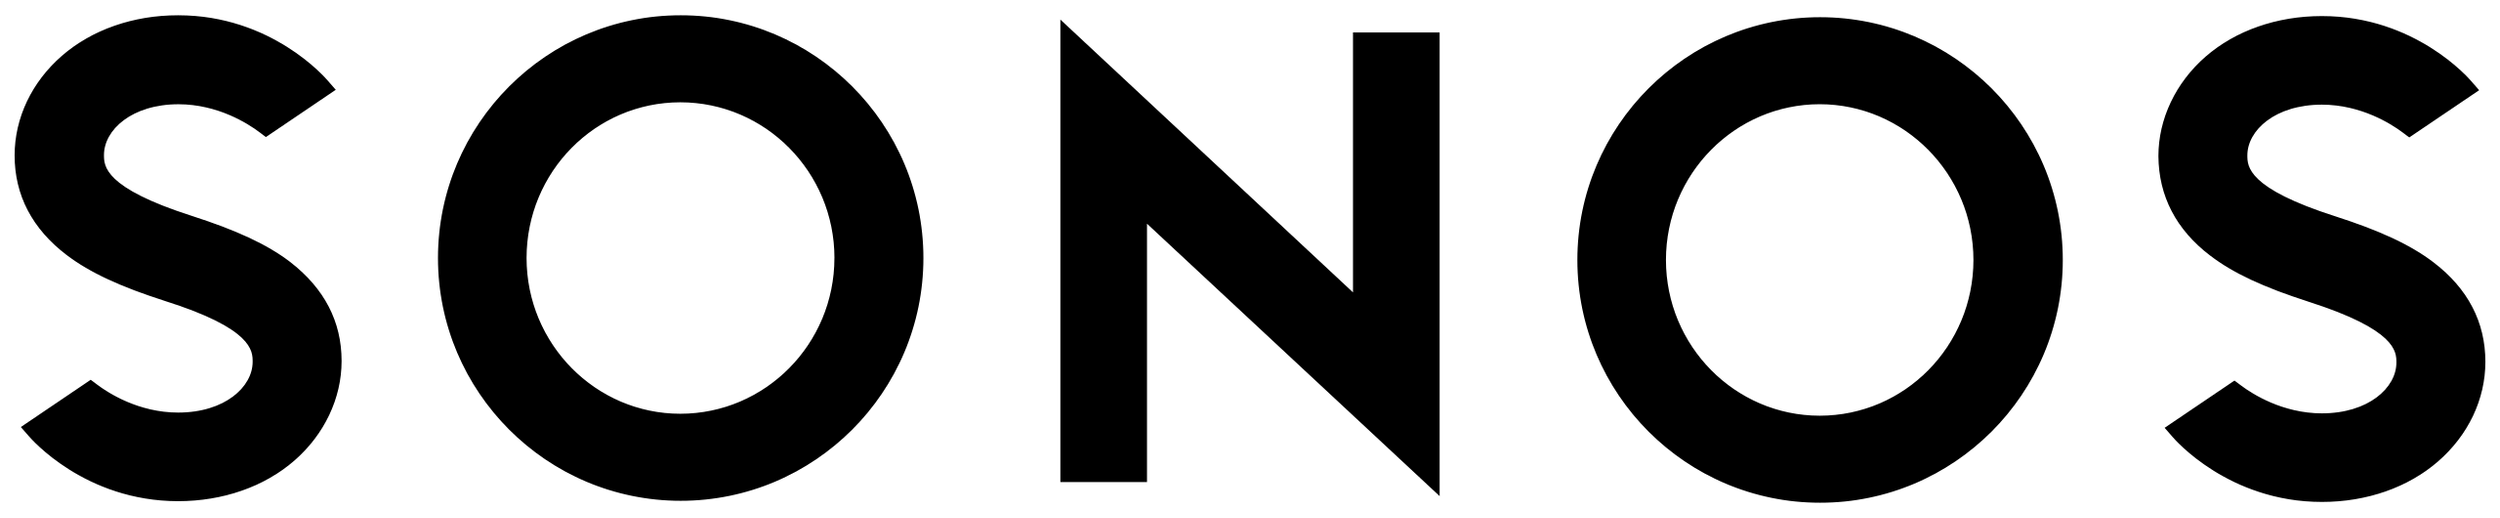 2560px-Sonos_(Unternehmen)_logo.png